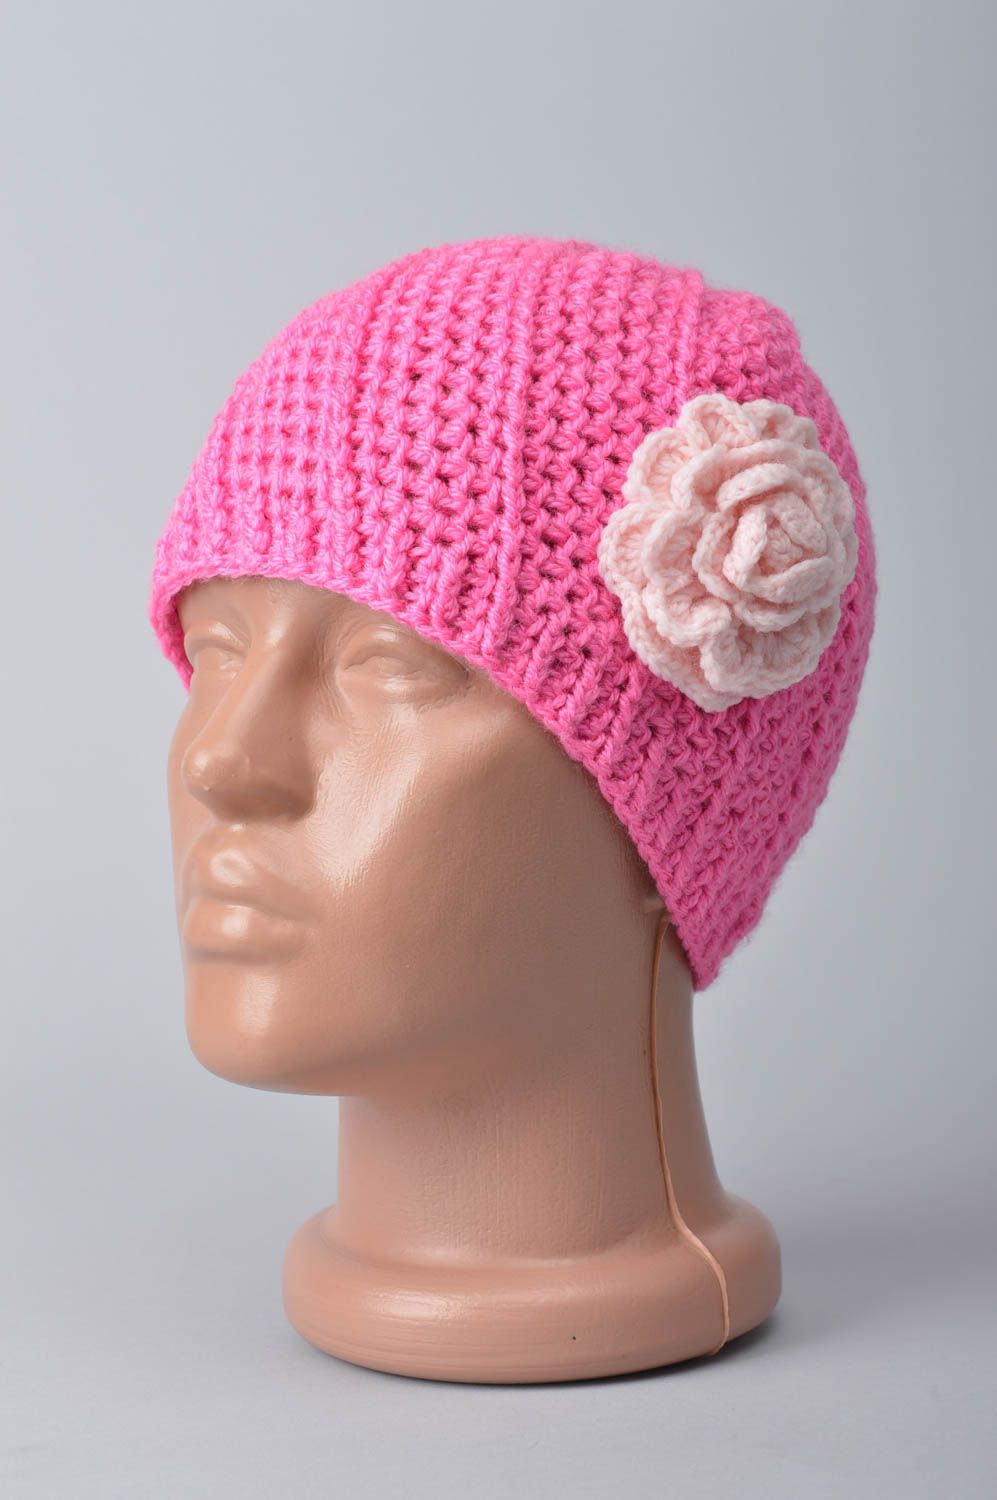 Handmade crochet hat girls hats kids accessories crochet baby hats gifts for kid photo 1